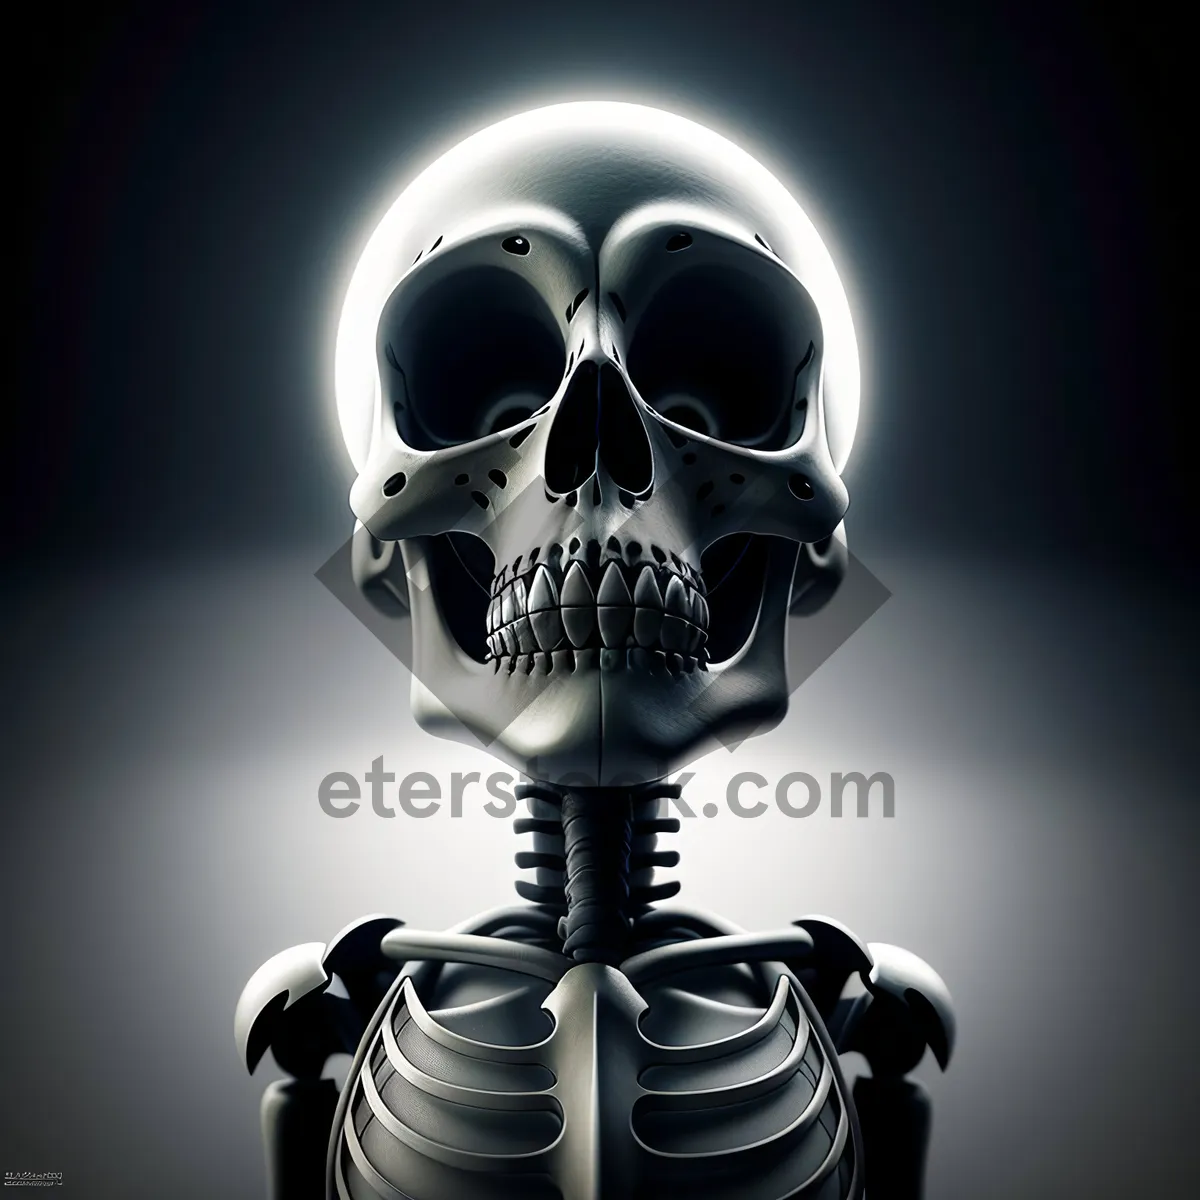 Picture of Spooky Skeletal Anatomy: Human Skull and Bones